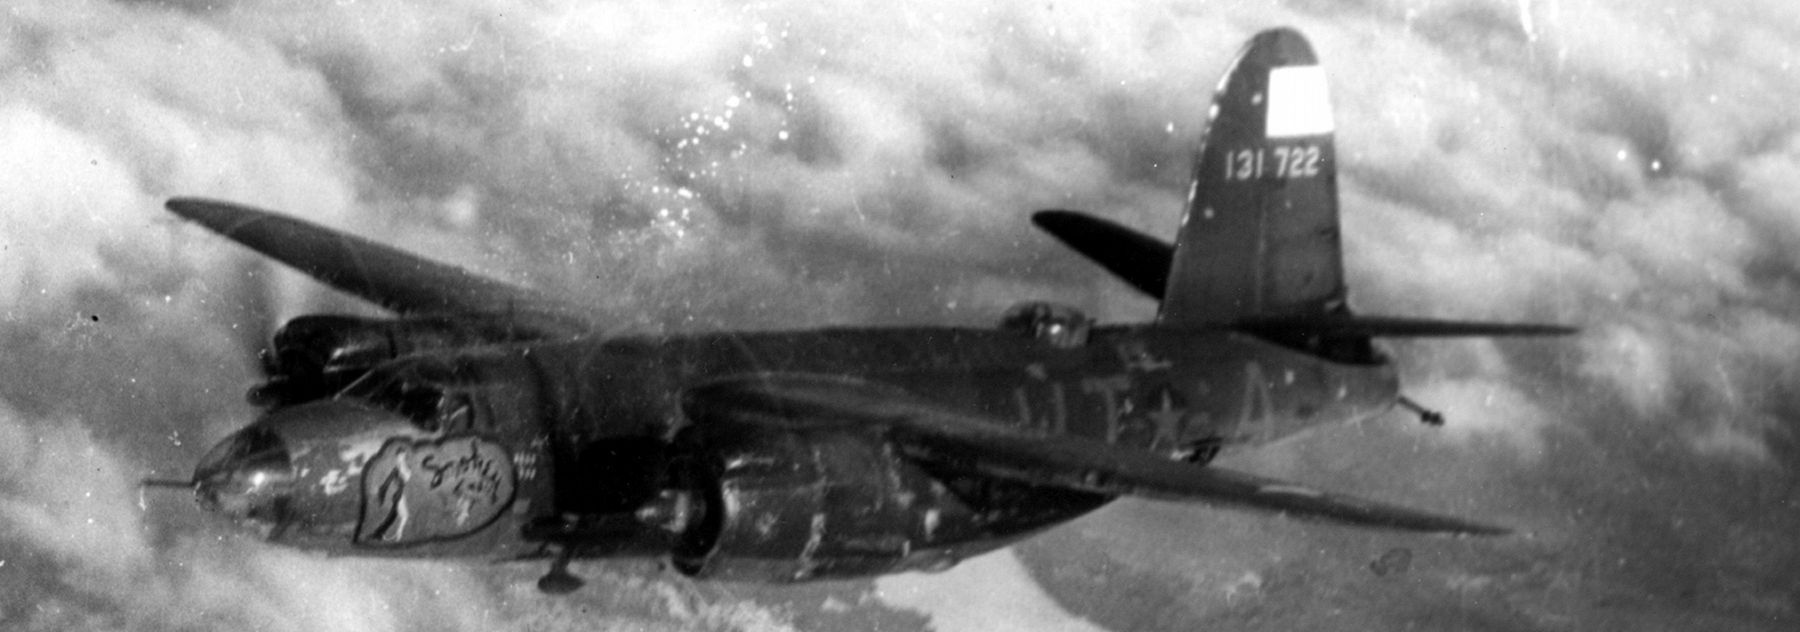 B-26 Marauder (WT-A, s/n 41-31722 "Five Aces II/Smokey Joe"), 456th Bomb Squadron, 323rd Bomb Group image. Click for full size.